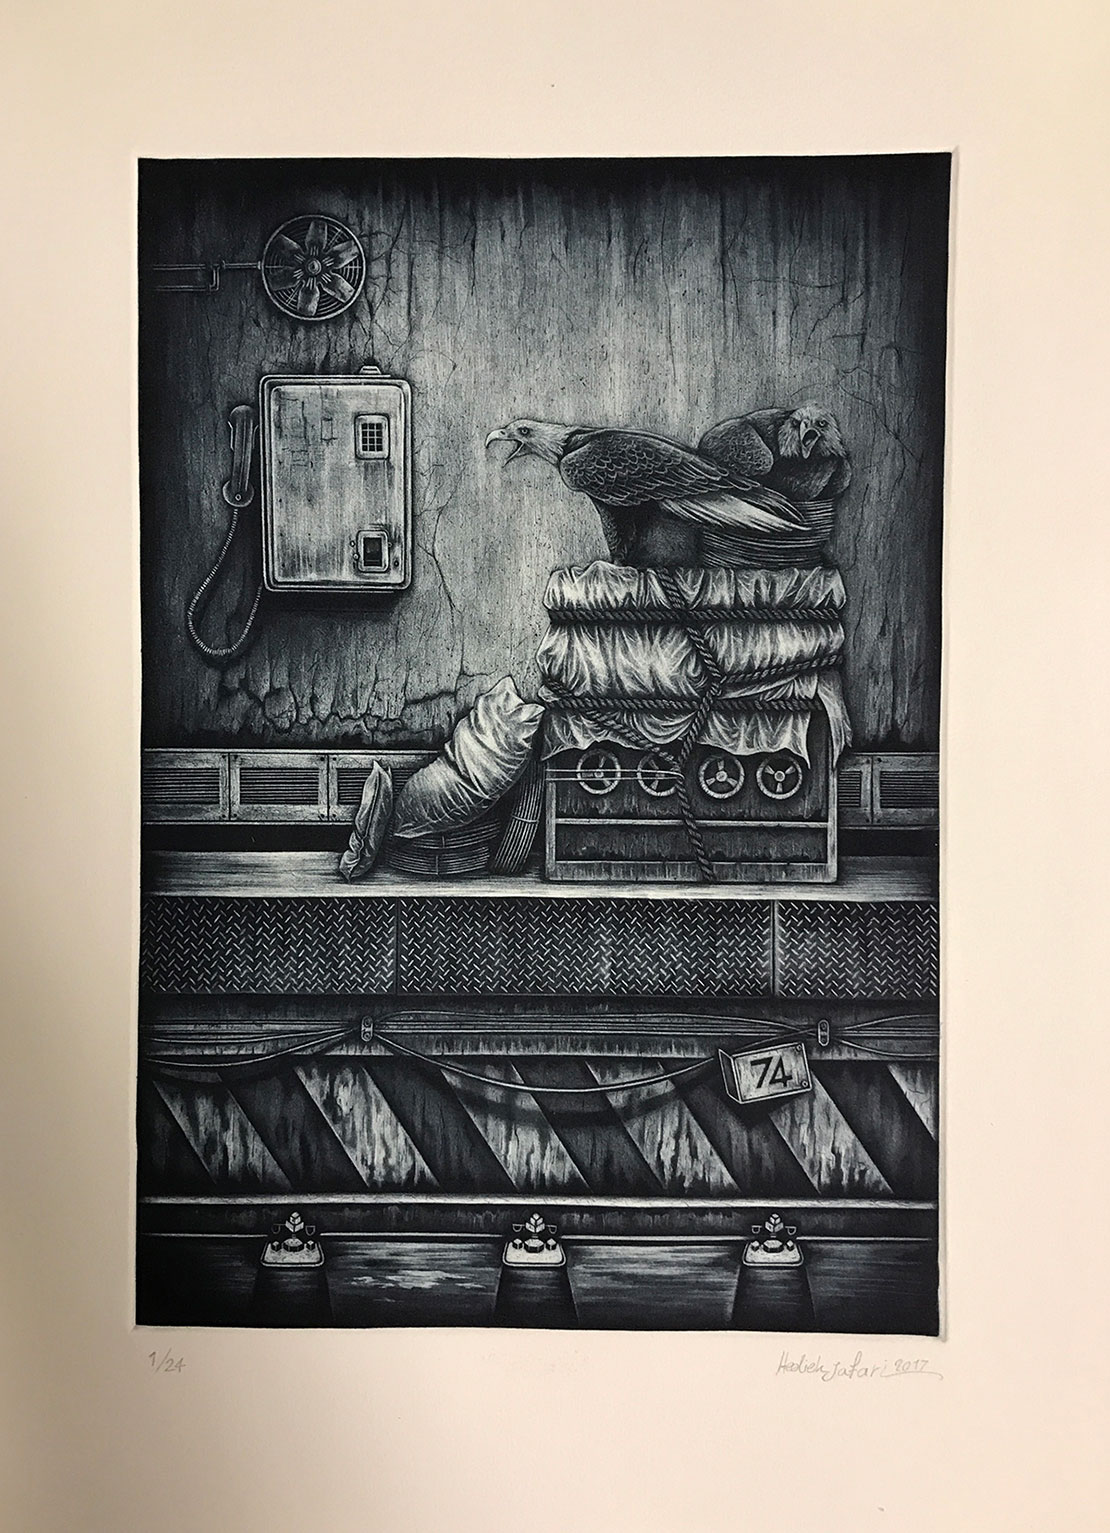 Hedieh Jafari, Hazard, mezzotint, drypoint, plate: 29x20 cm, edition of 24 + 3 AP, 2017